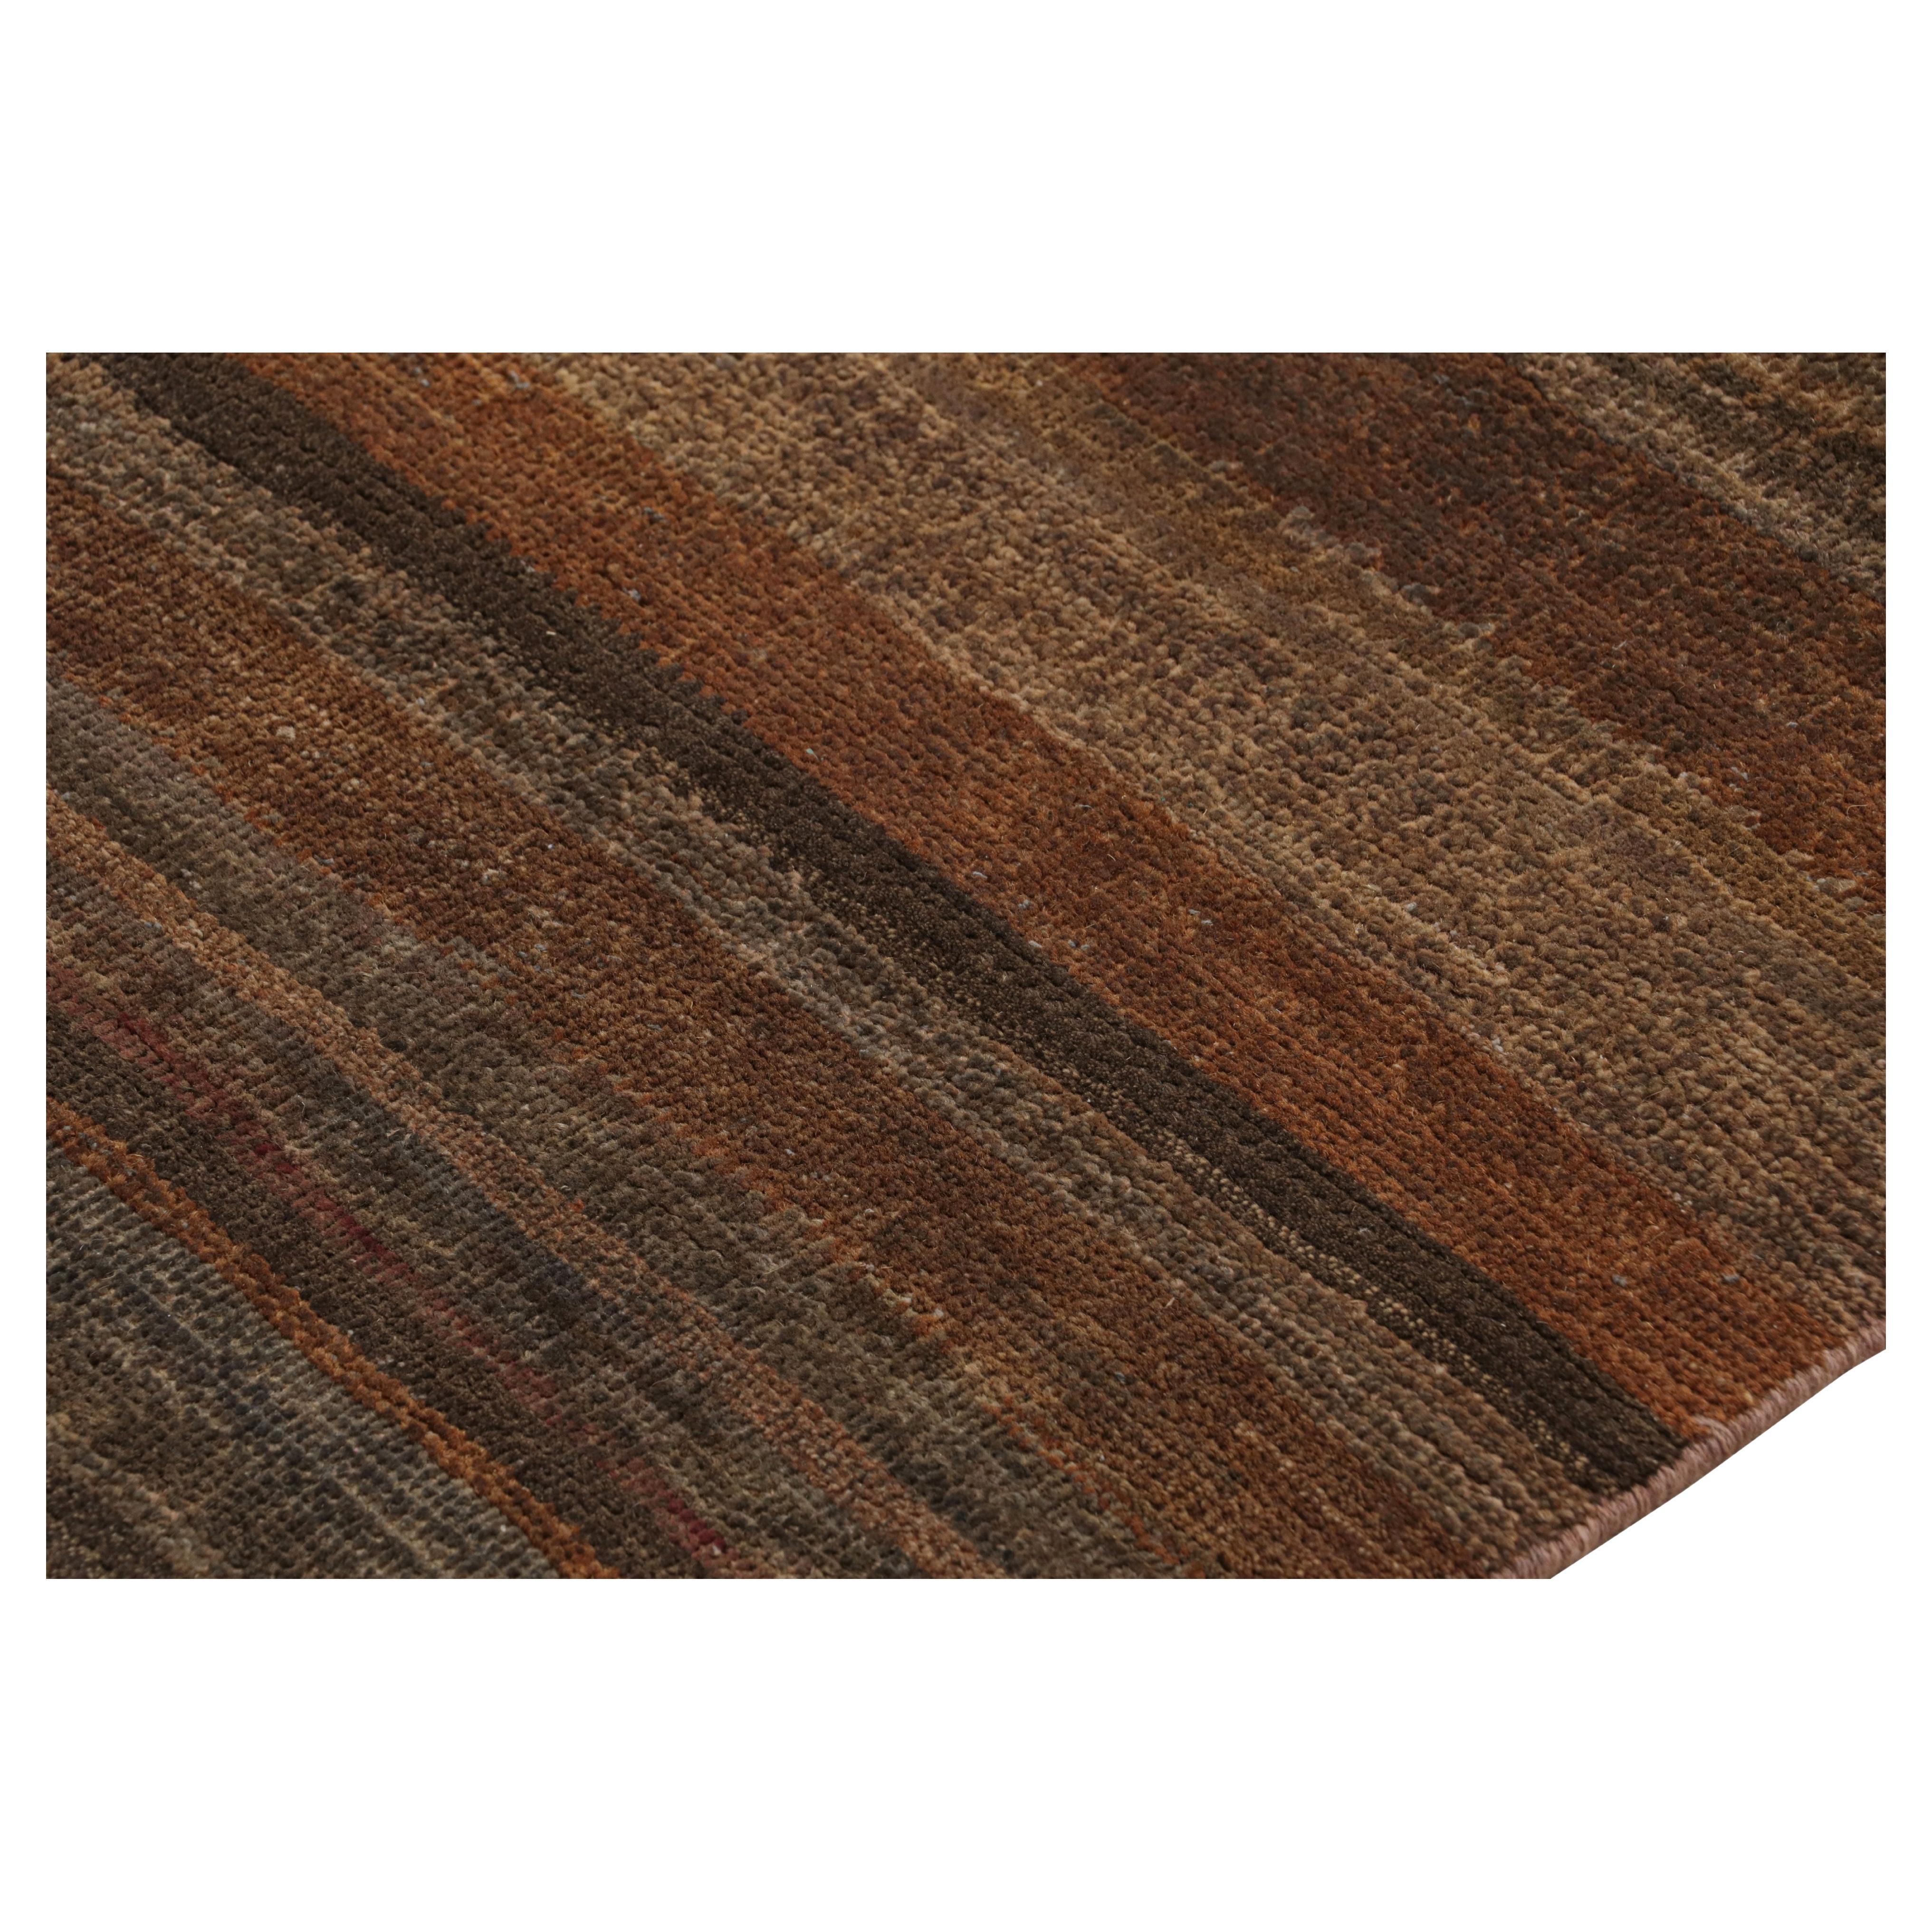 Rug & Kilim’s Modern Textural Rug in Beige-Brown and Umber Stripes and Striae